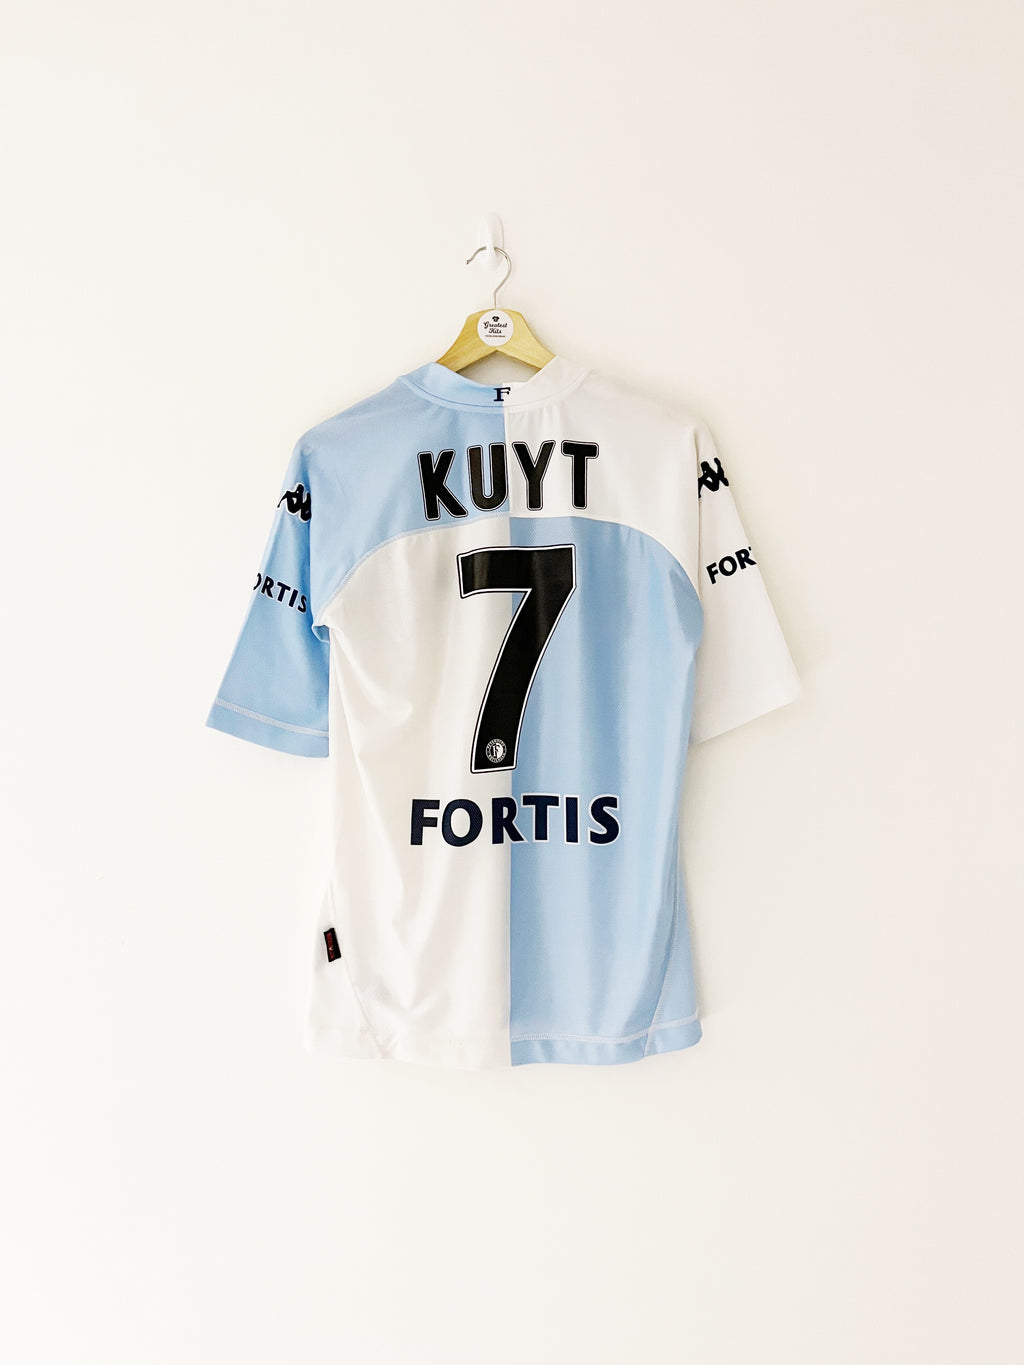 2004/05 Camiseta visitante del Feyenoord Kuyt # 7 (M) 9/10